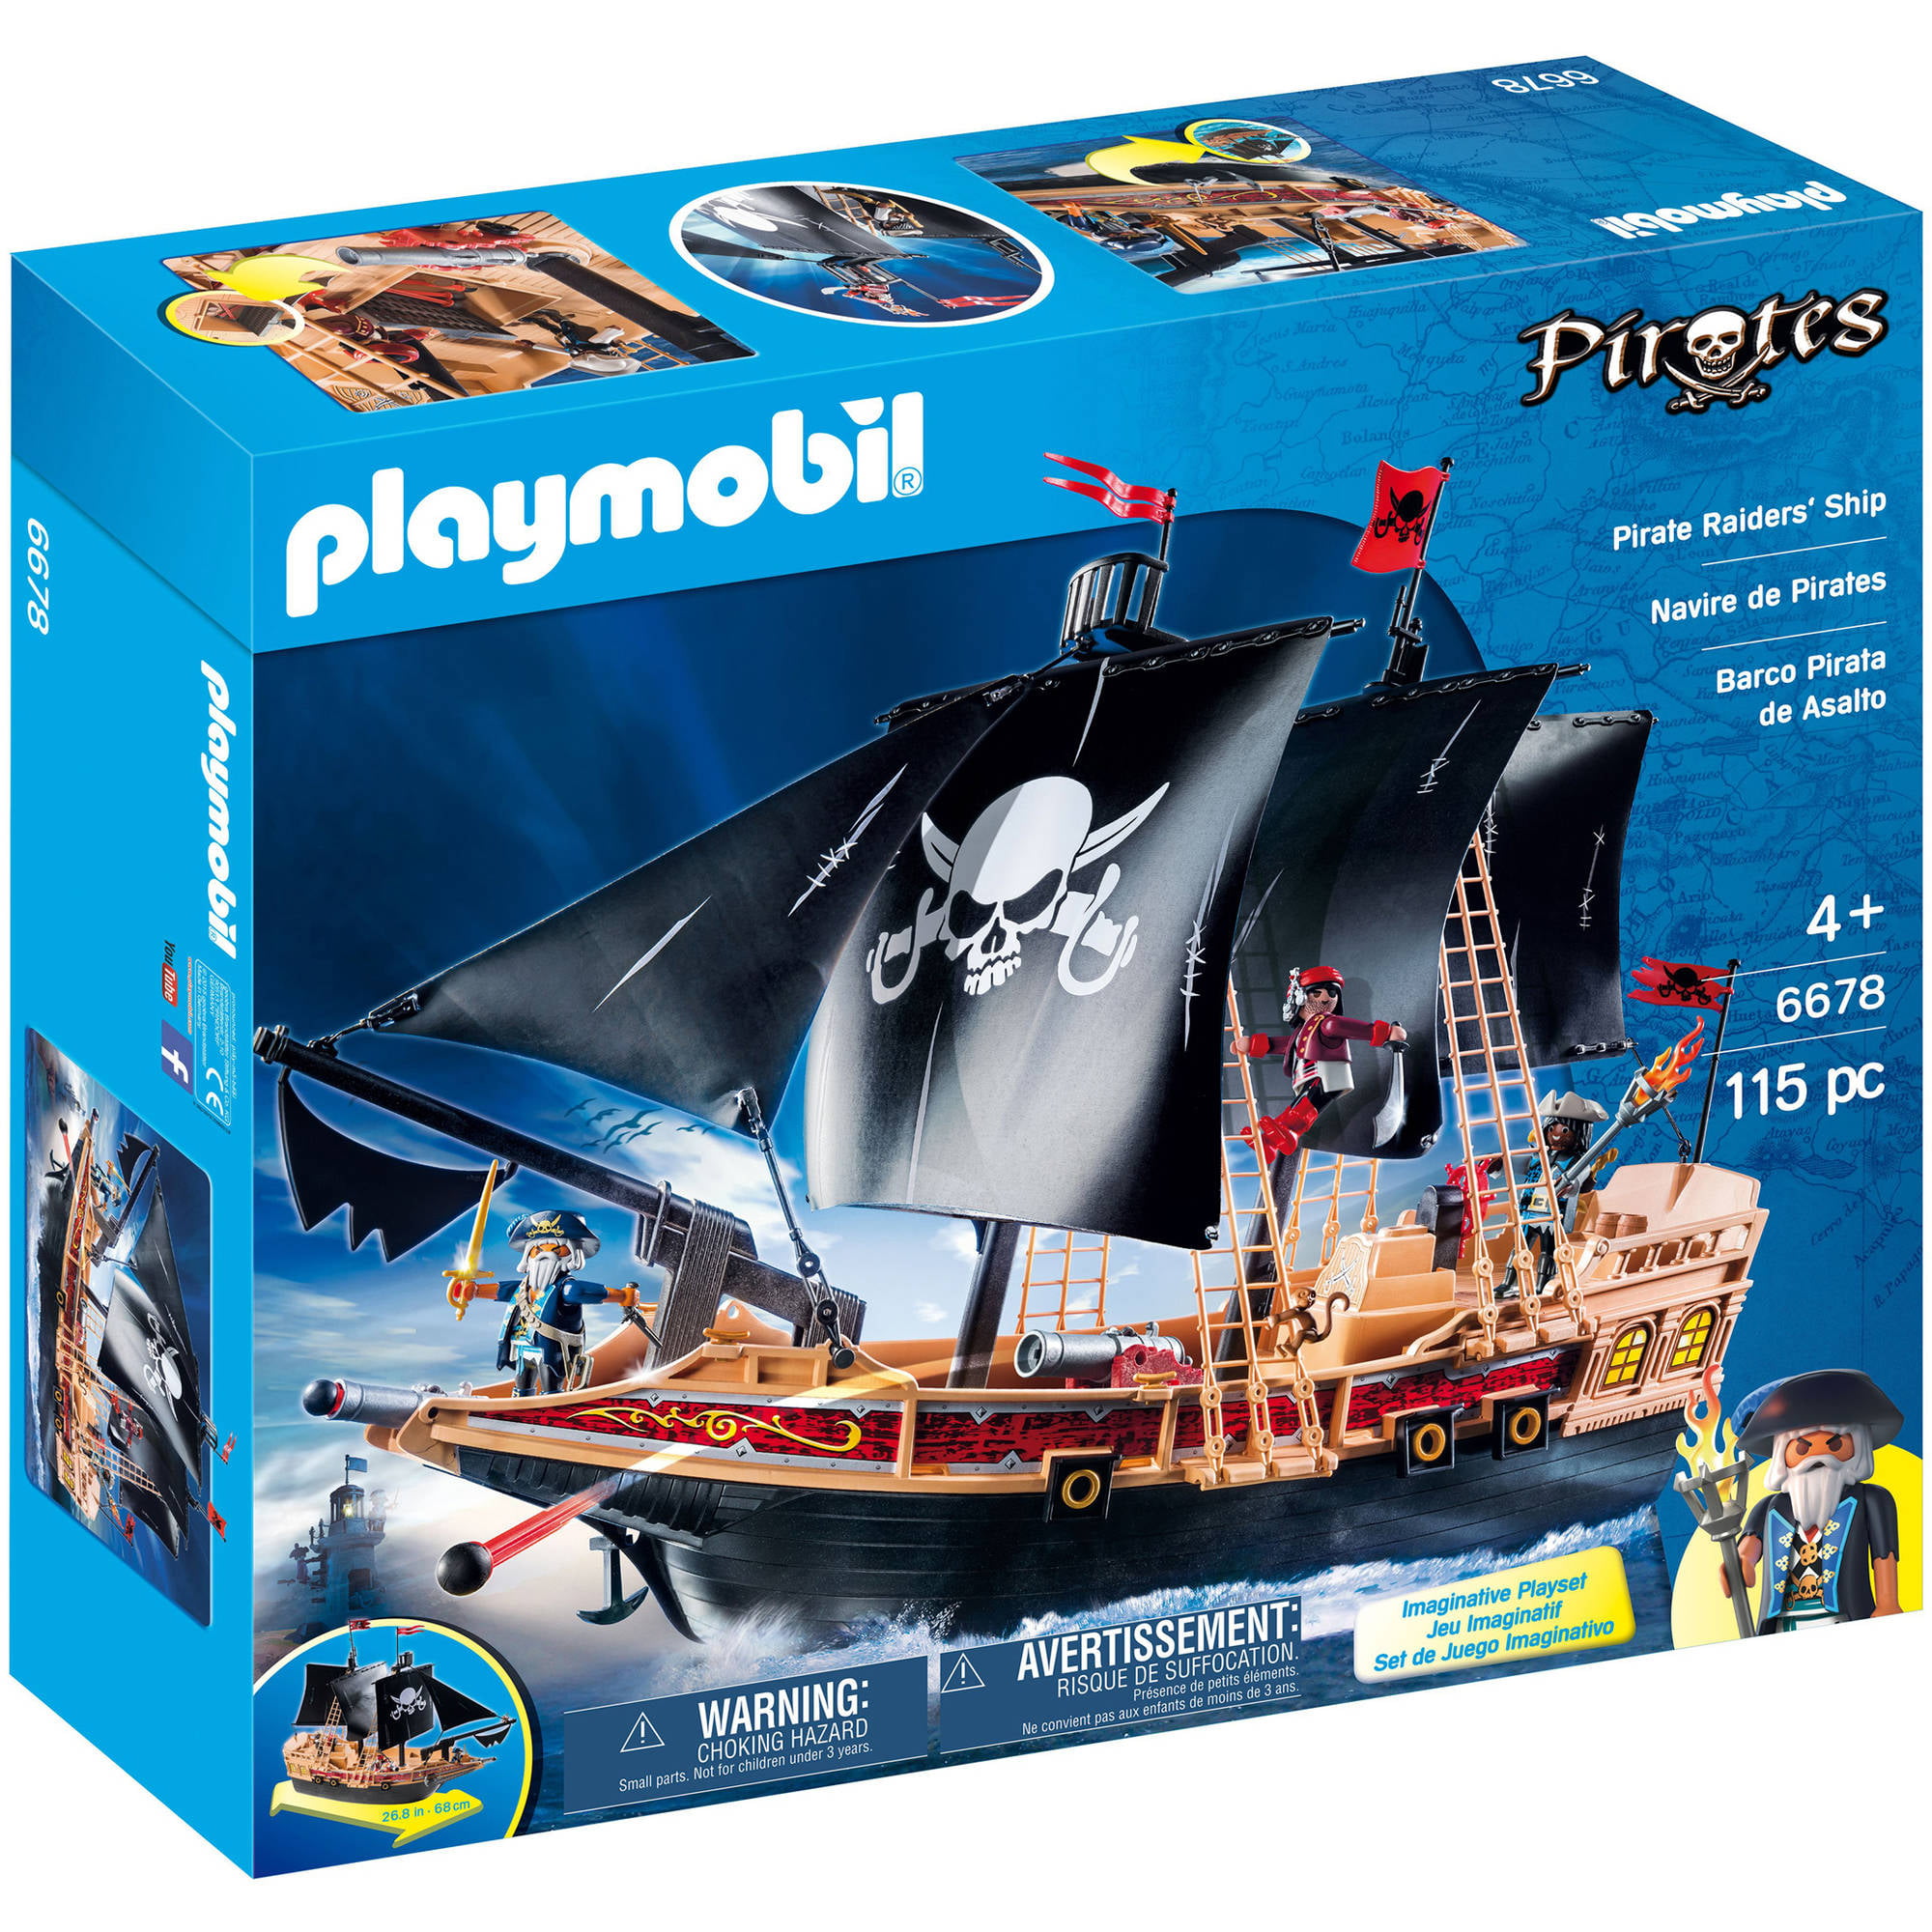 Playmobil Pirate Raiders Ship Walmart Com